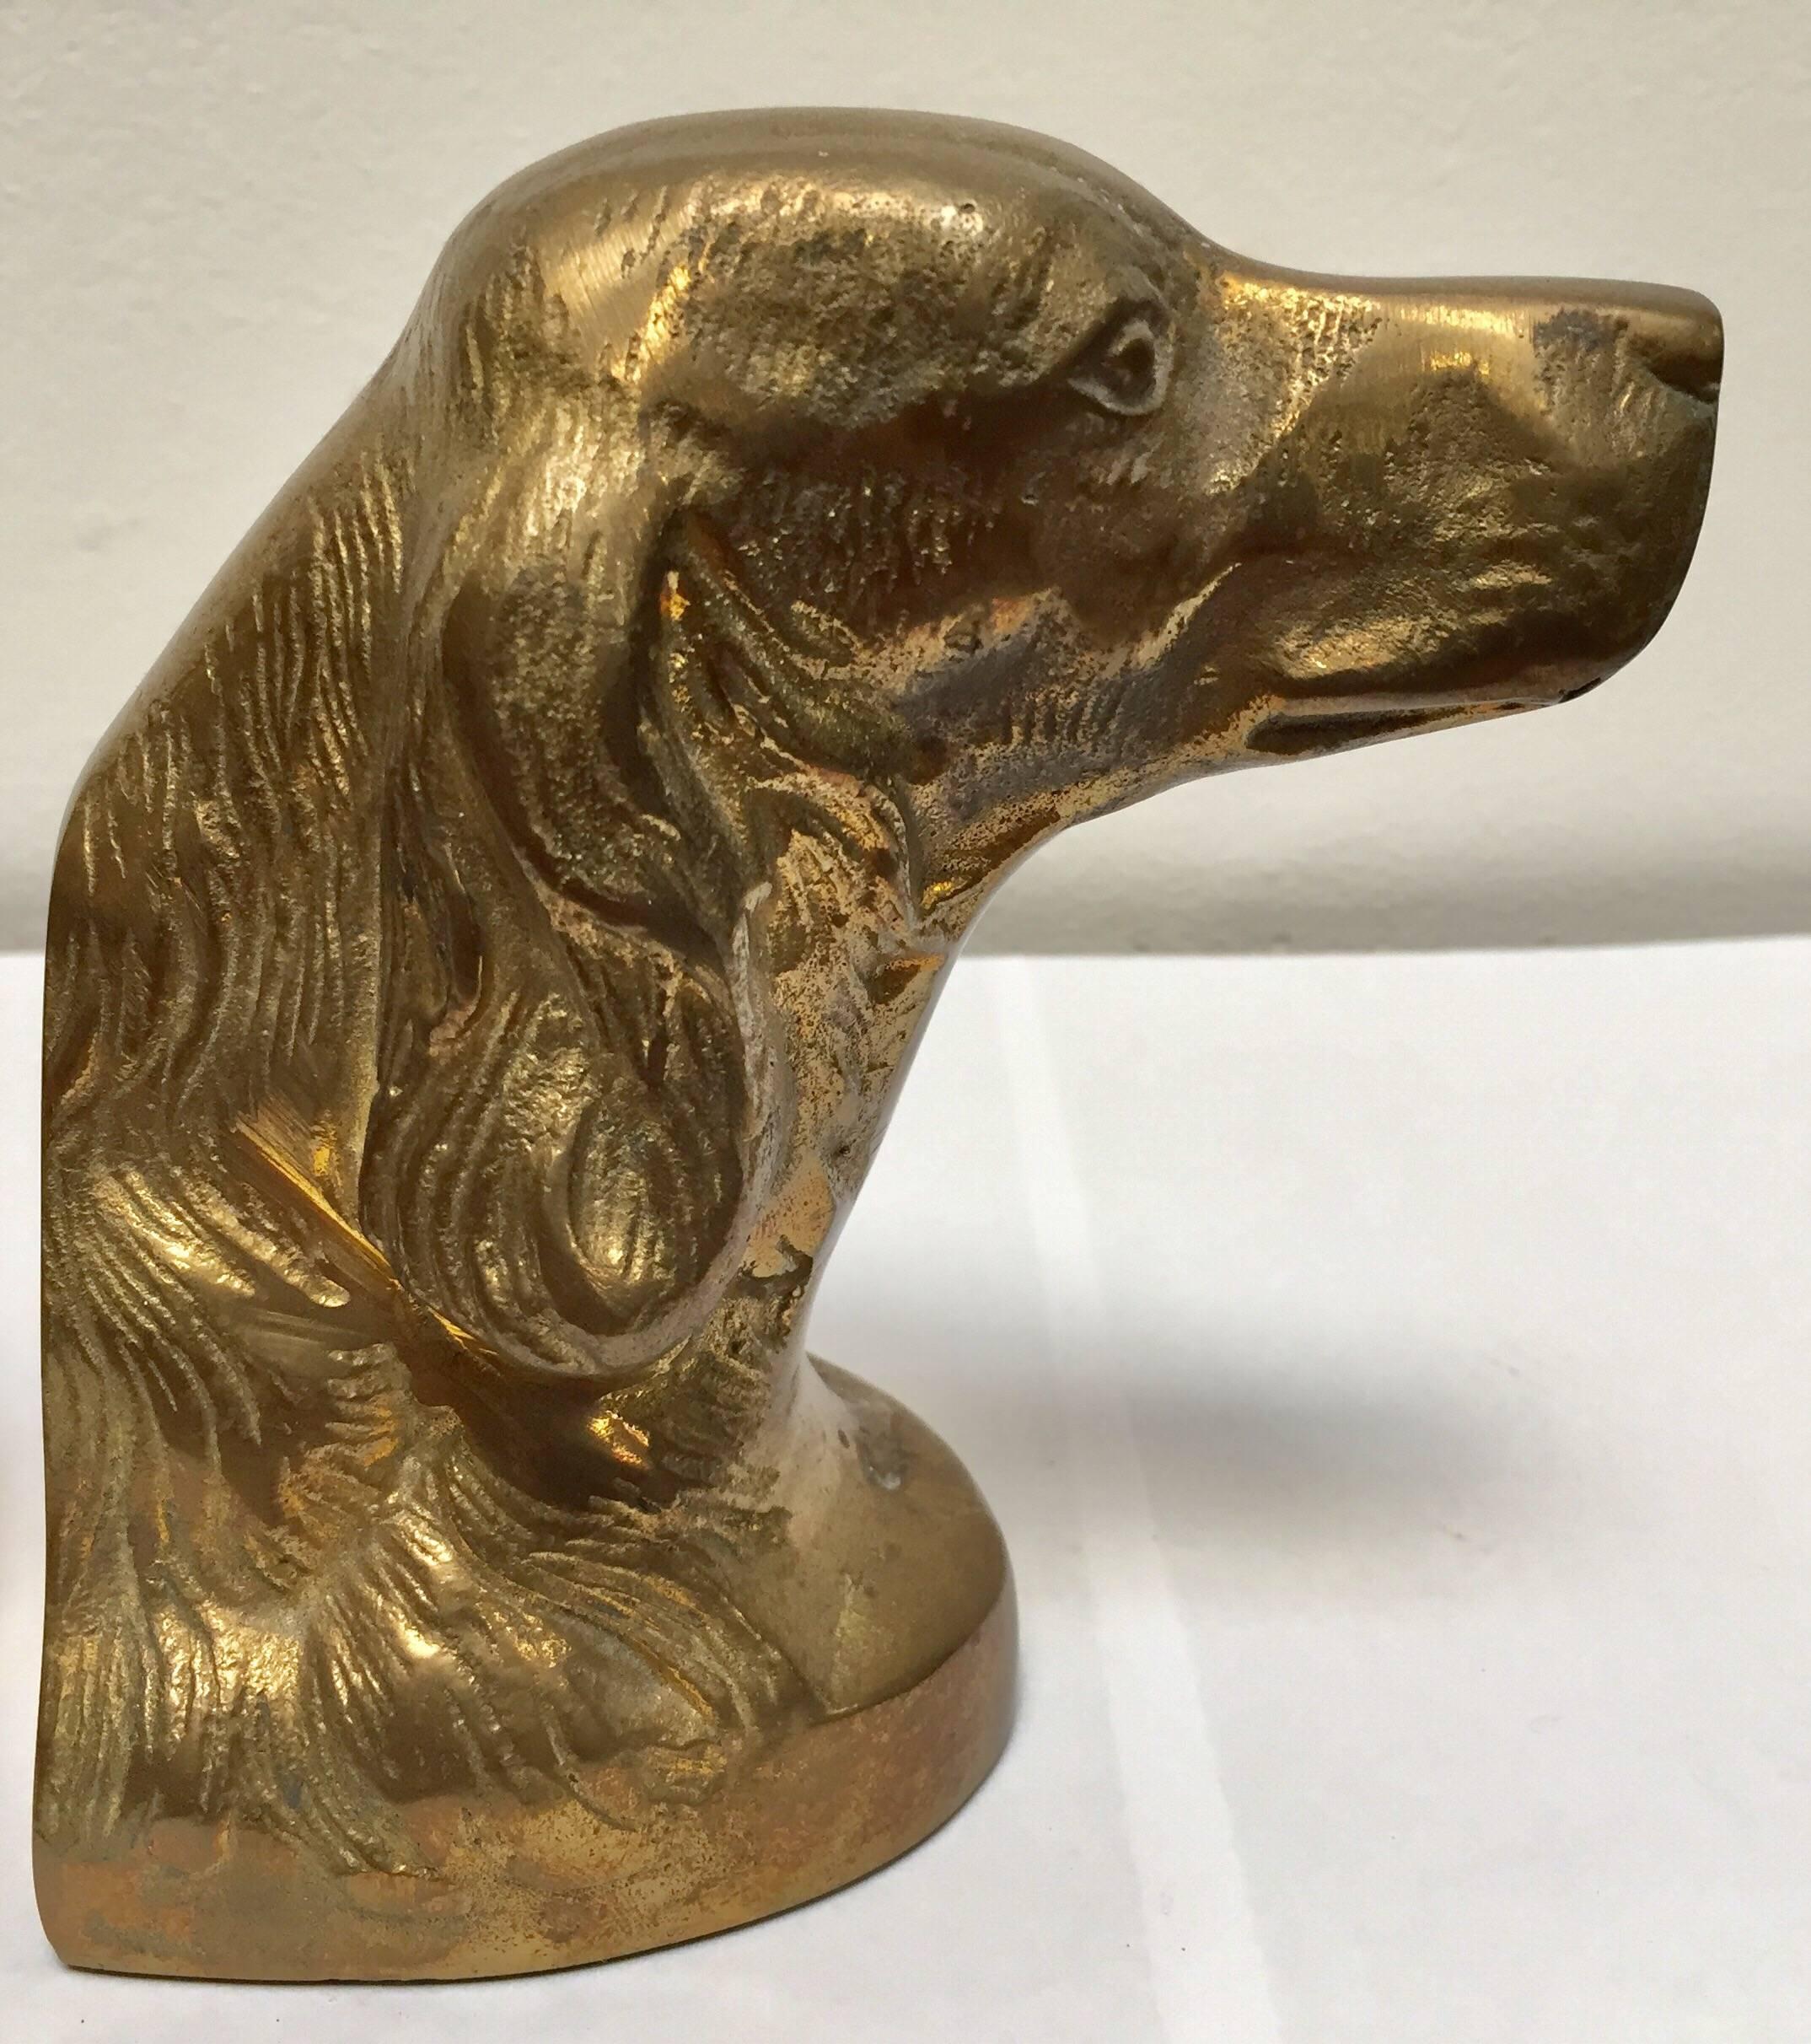 Set of vintage Cast metal brass dog beagle sculpture bust bookends.
Size for each is 5